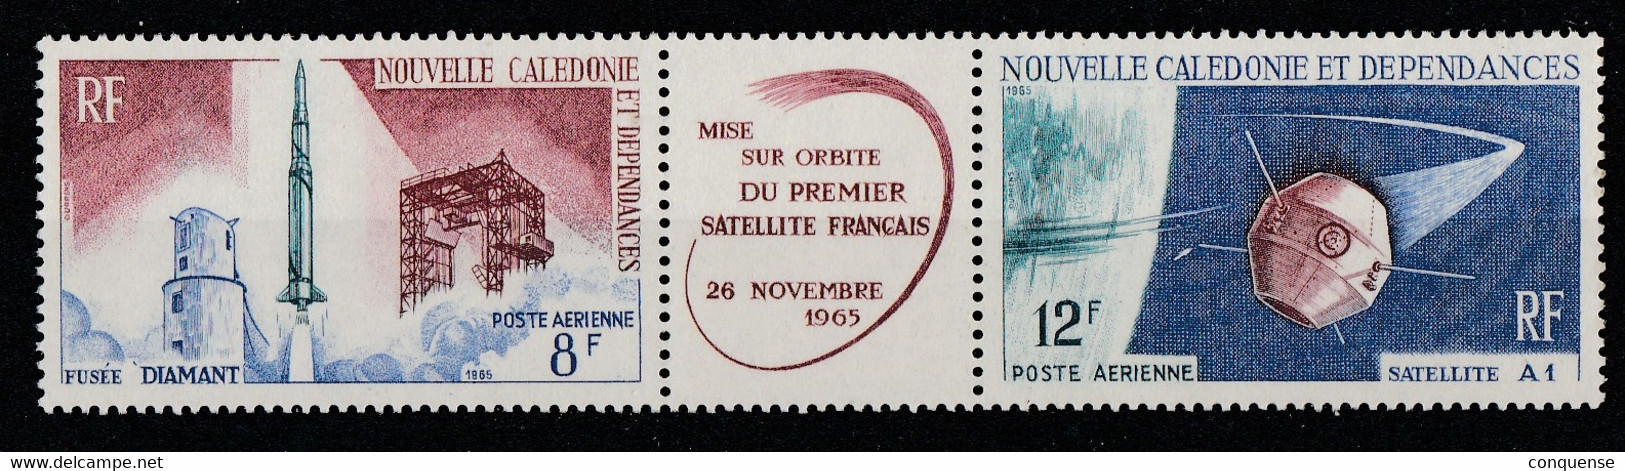 NUEVA  CALEDONIA  1966  **  MNH  YVERT  85 A   PERFECTO - 1966 Lancement 1e Satellite Française à Hammaguir